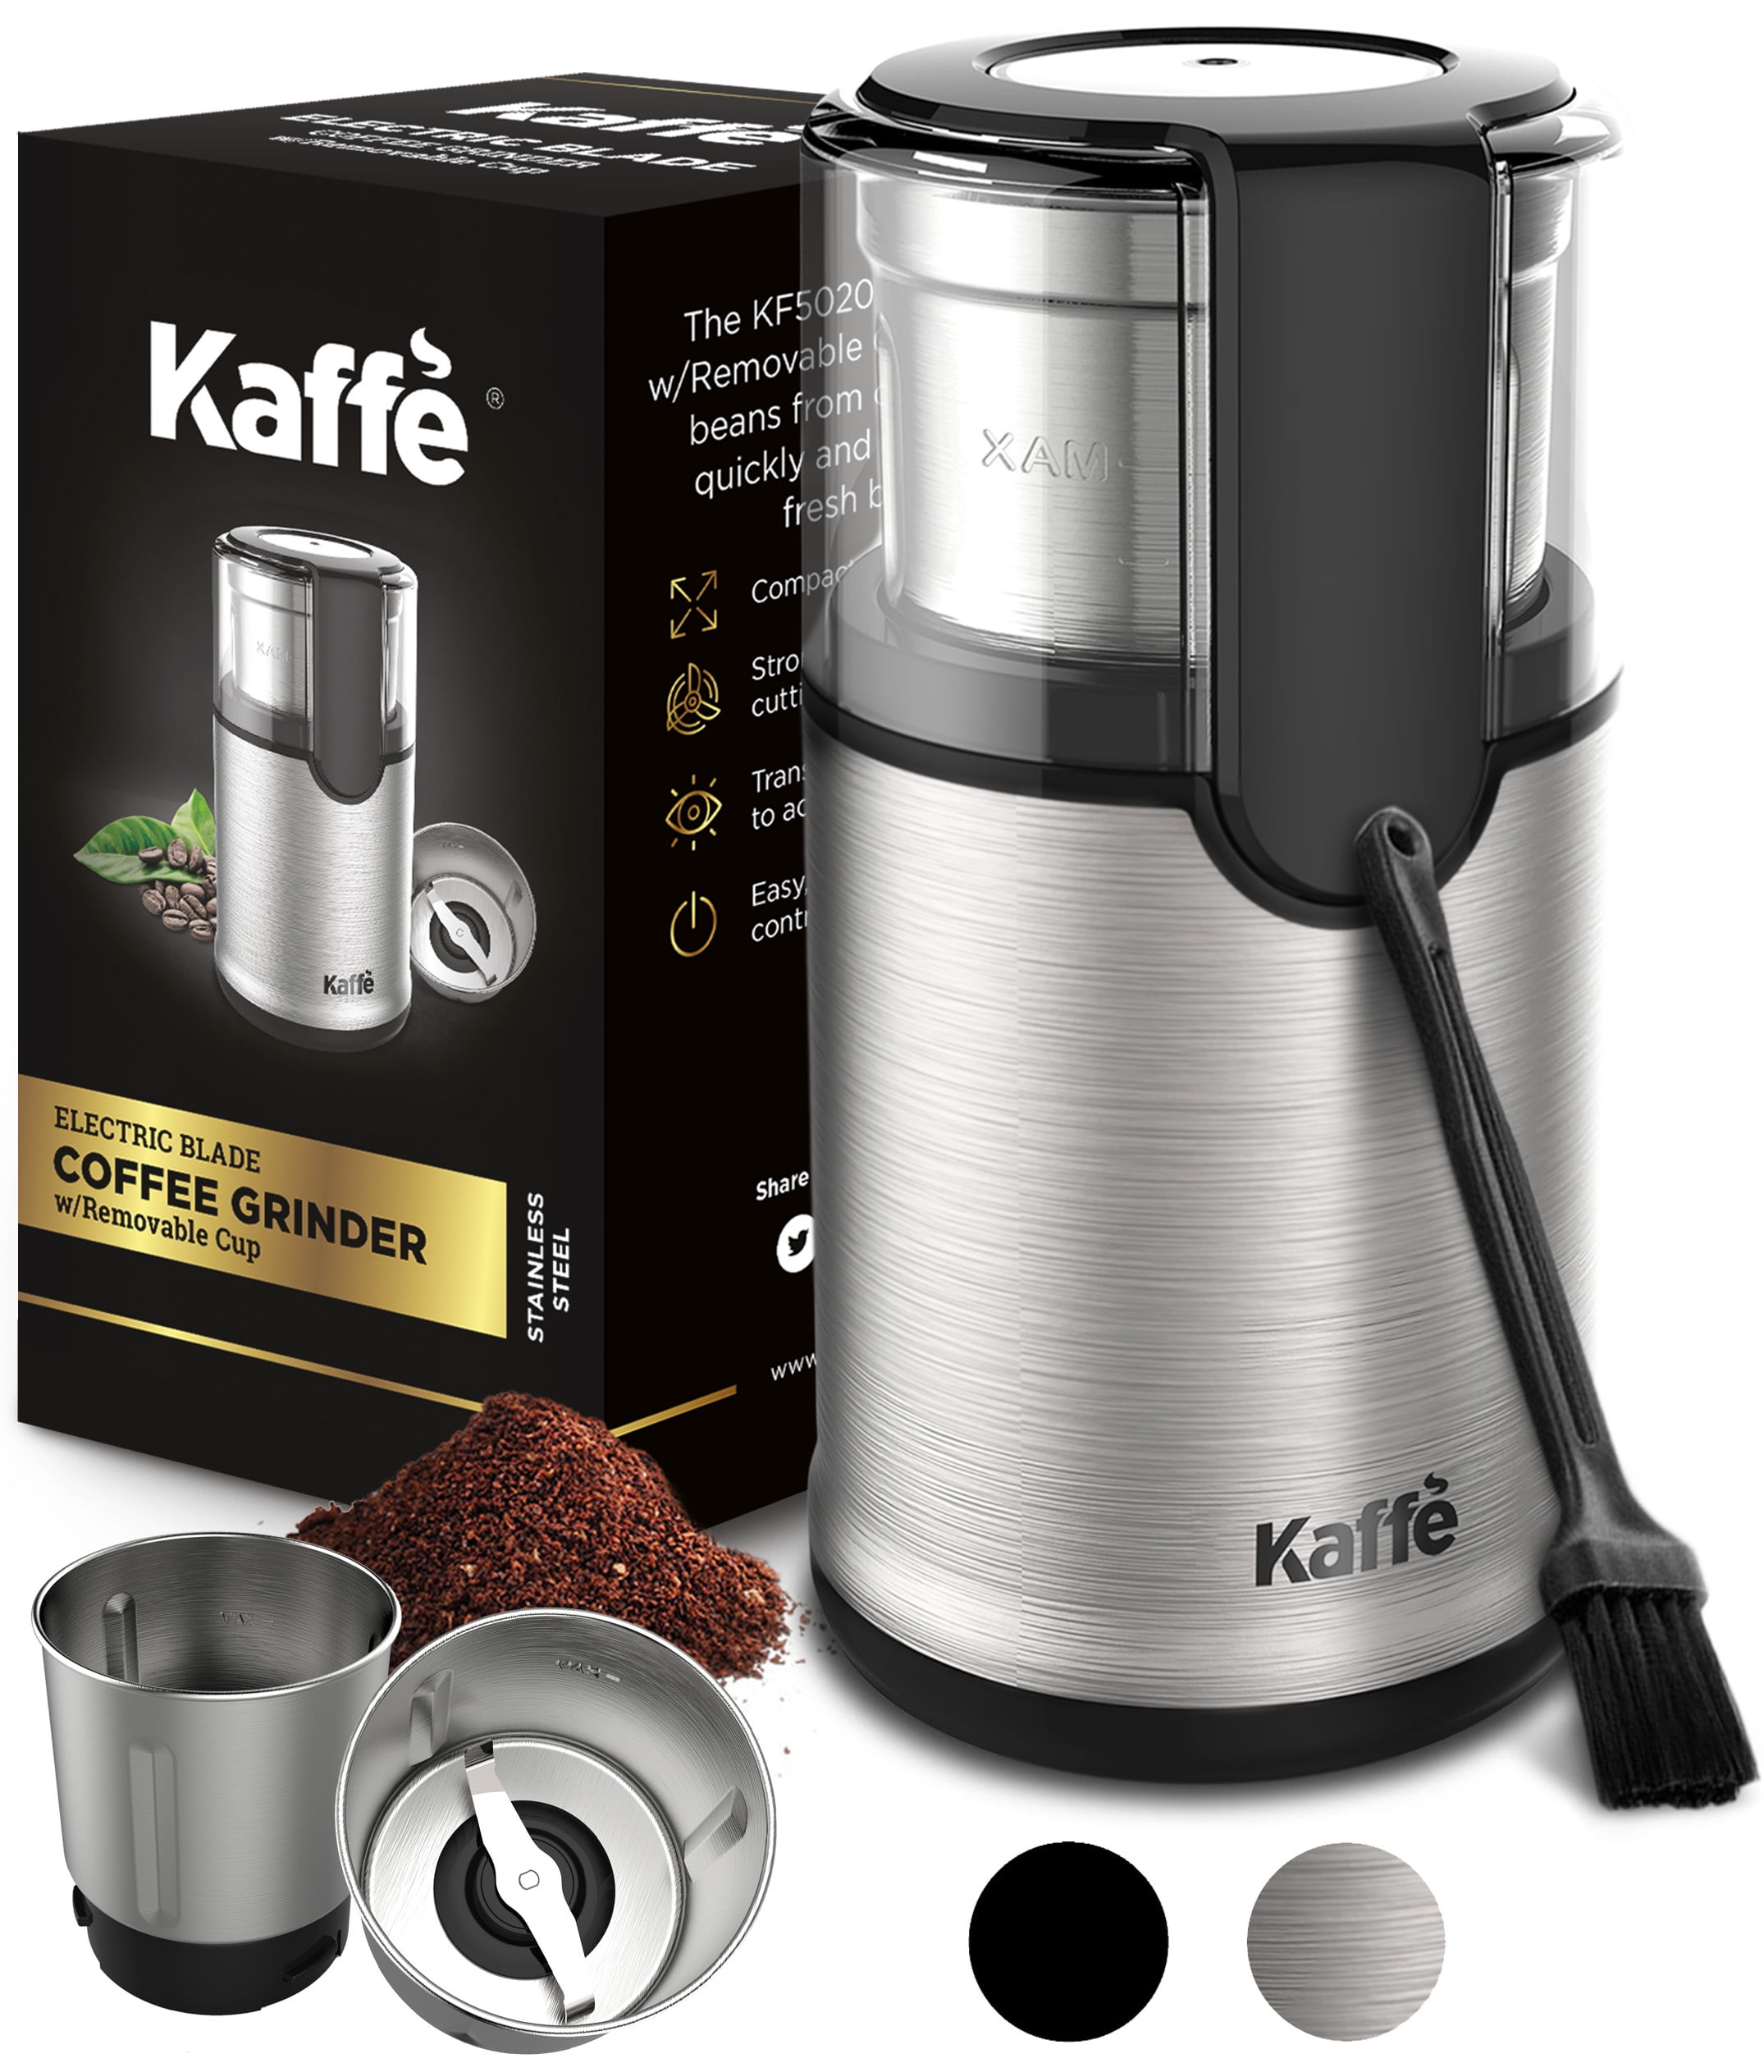  Kaffe - Molinillo eléctrico de granos de café con cepillo de  limpieza. Fácil operación de encendido/apagado para expreso, infusión fría,  hierbas, especias, frutos secos. (14 tazas/3.5 onzas), color negro : Hogar